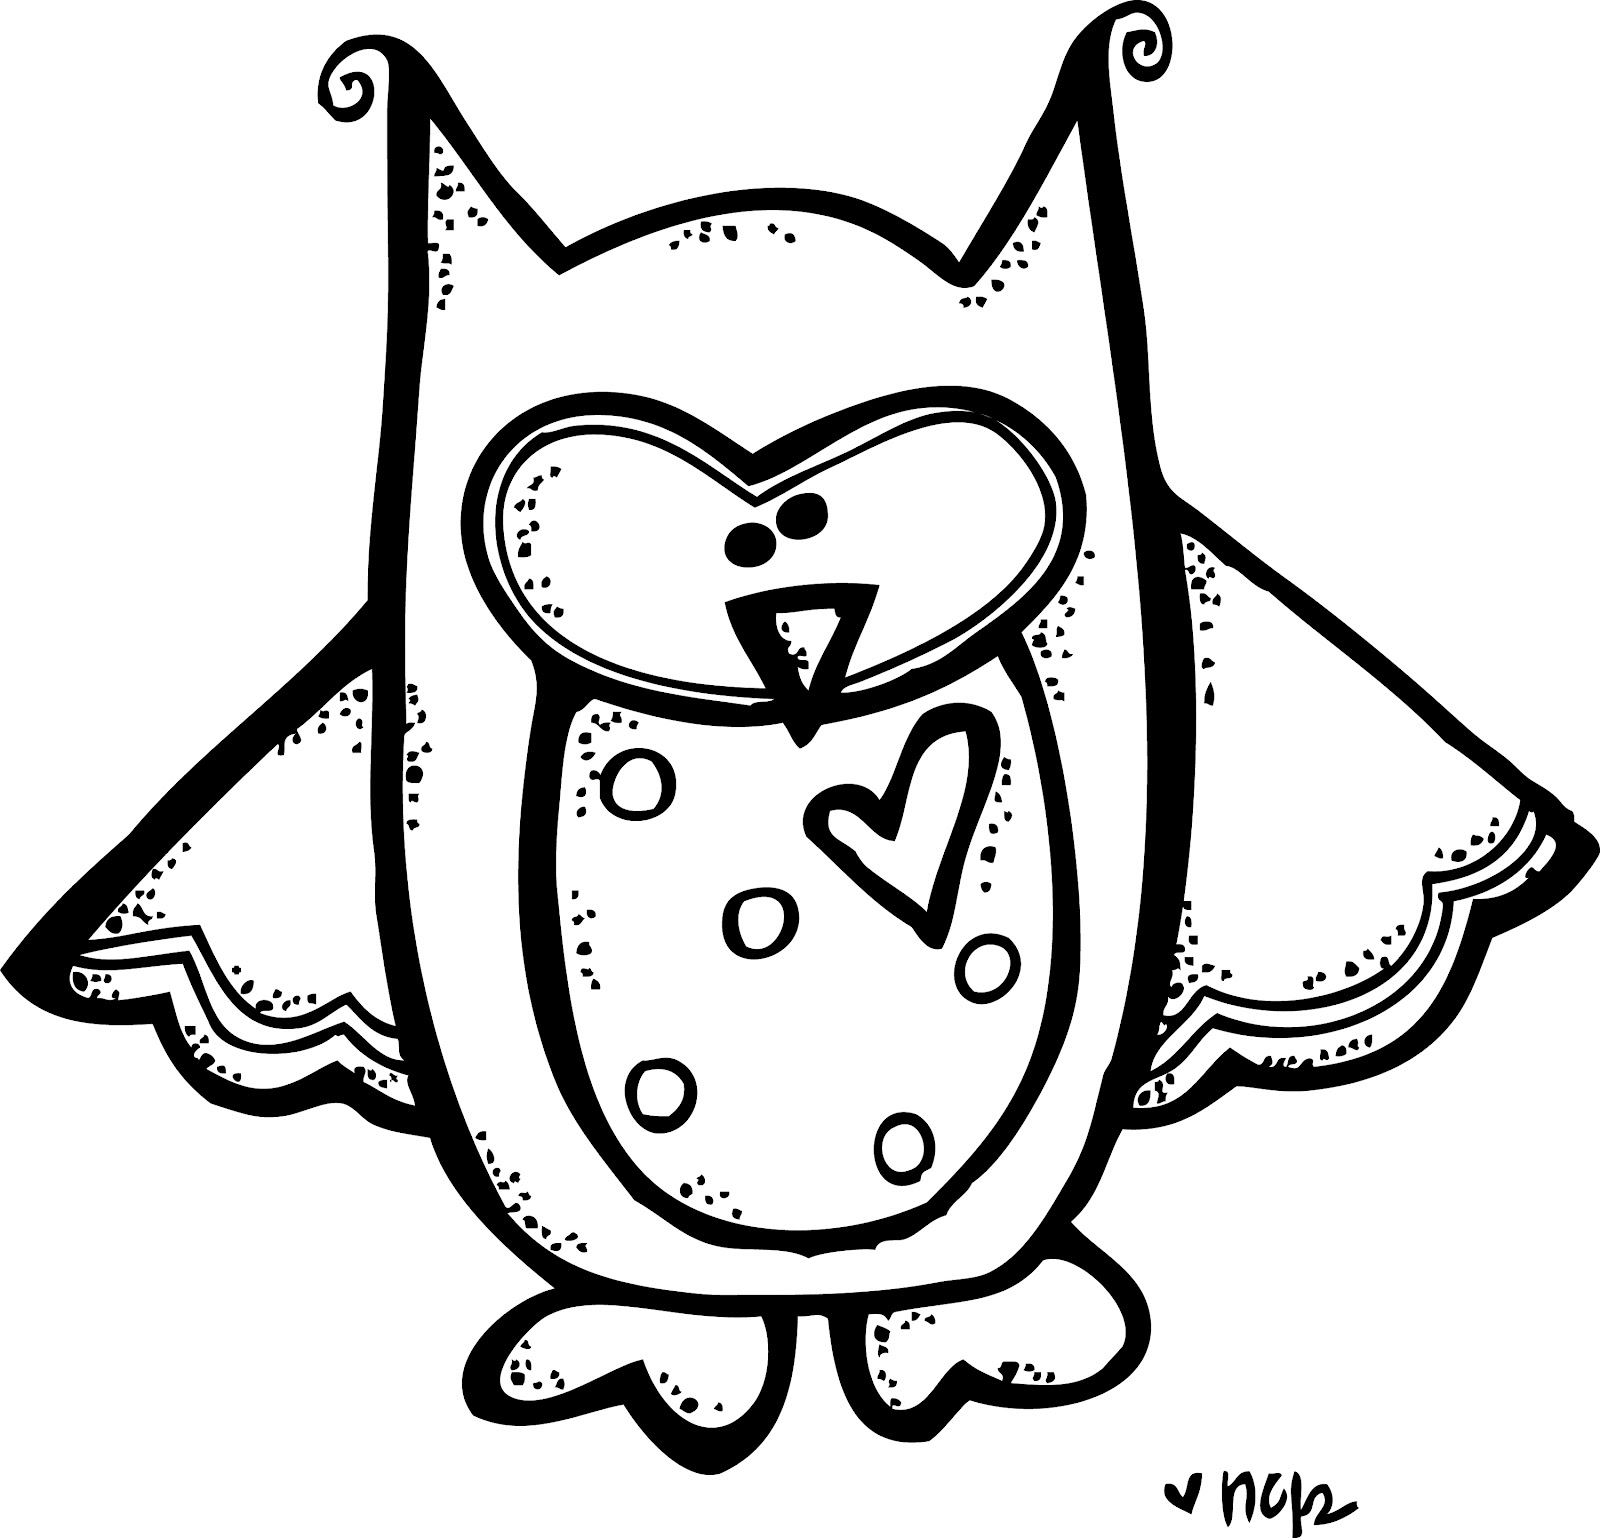 drawing of screech owl .